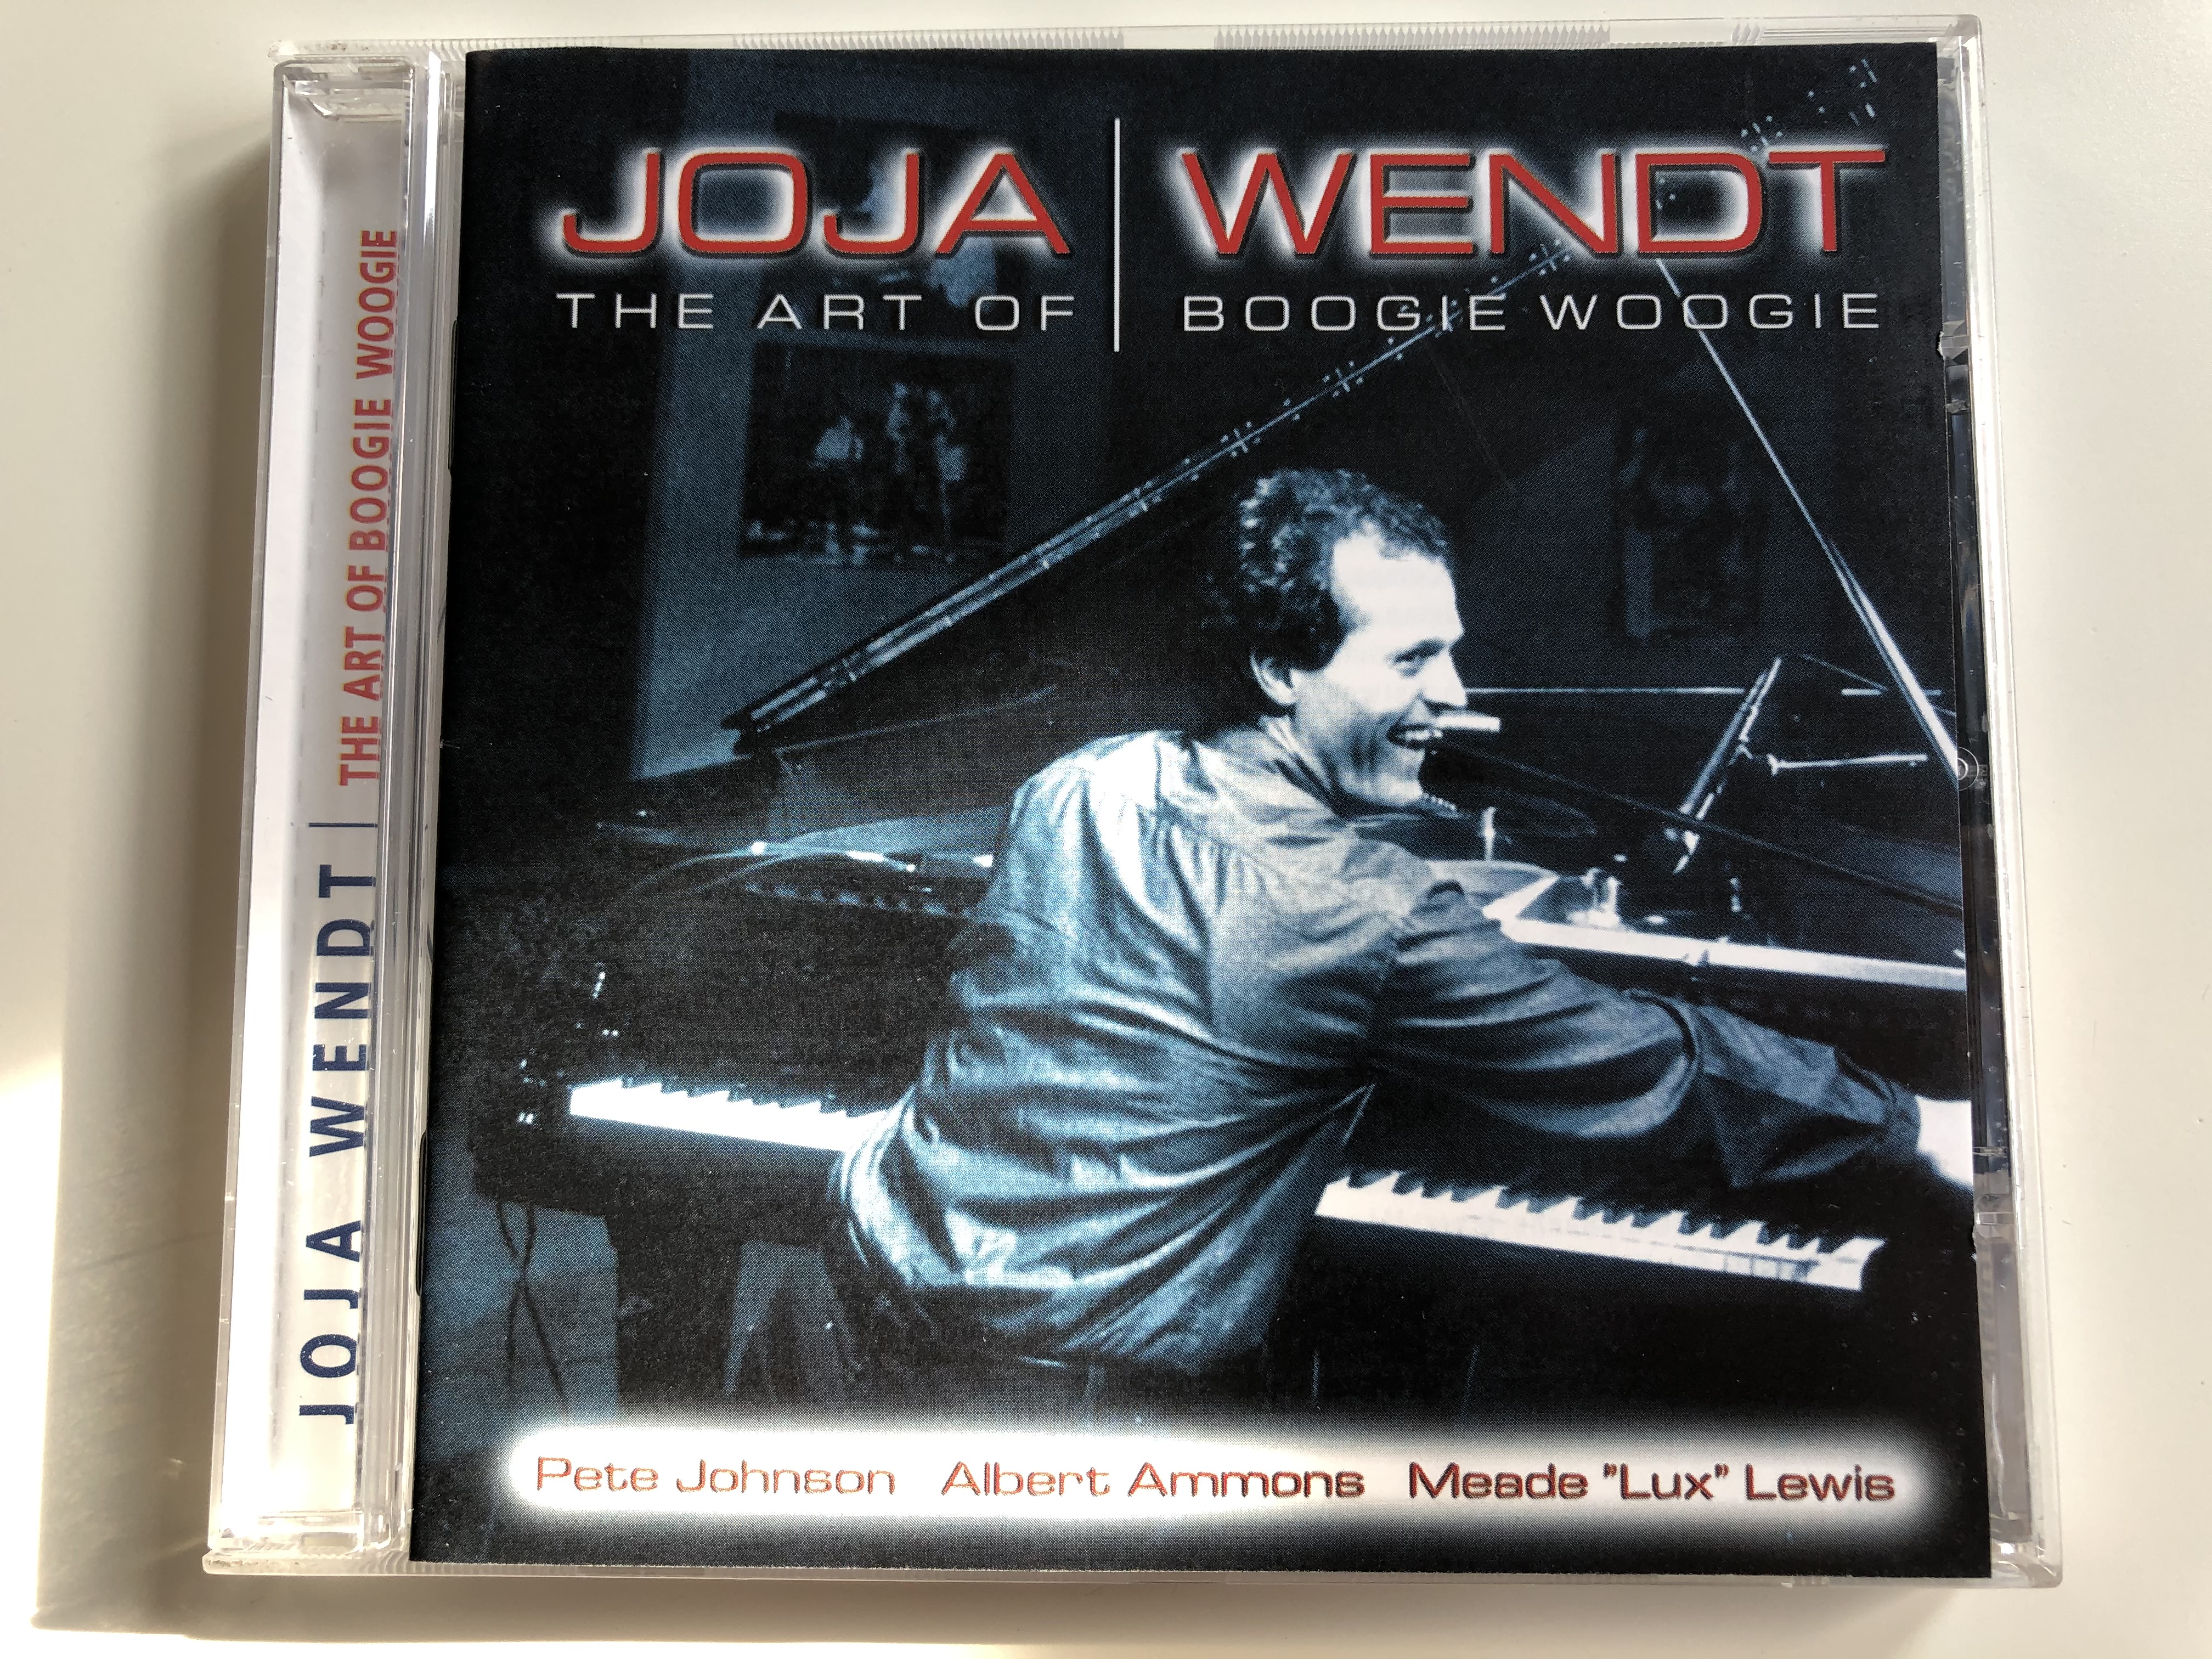 joja-wendt-the-art-of-boogie-woogie-pete-johnson-albert-ammons-meade-lux-lewis-international-music-company-audio-cd-201625-211-1-.jpg